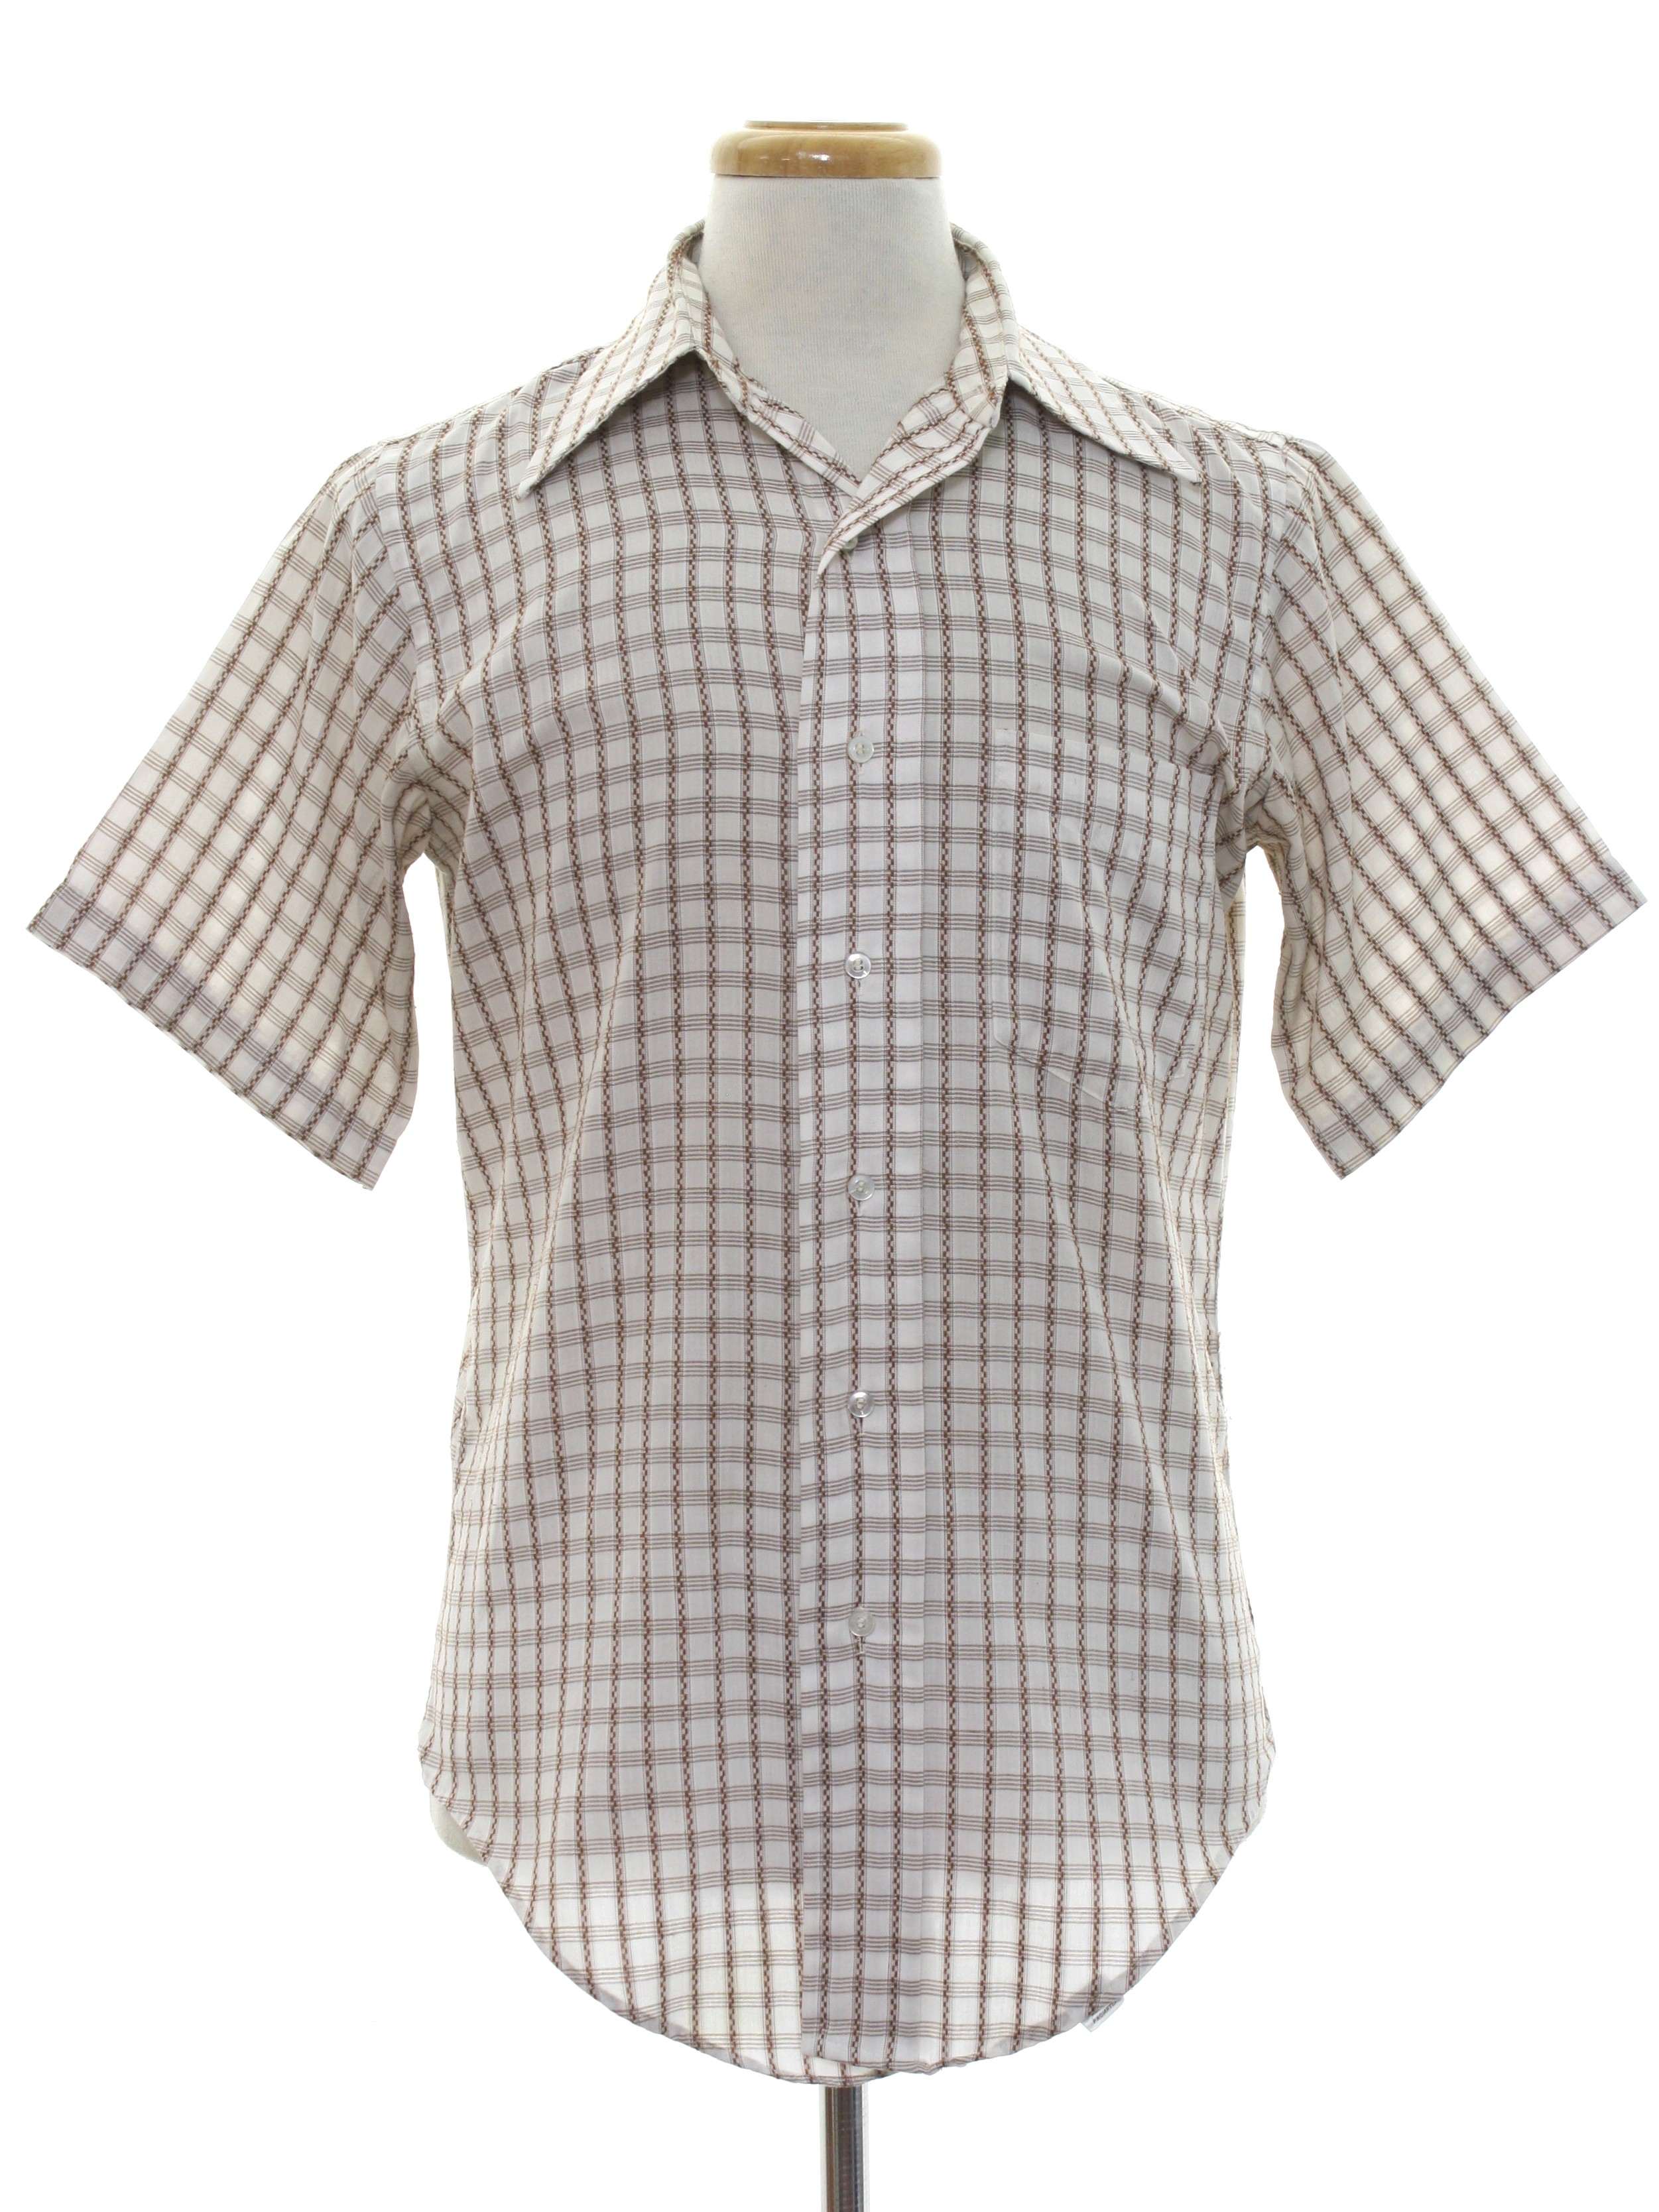 Retro Seventies Shirt: 70s -Grodins- Mens white with brown plaid print ...